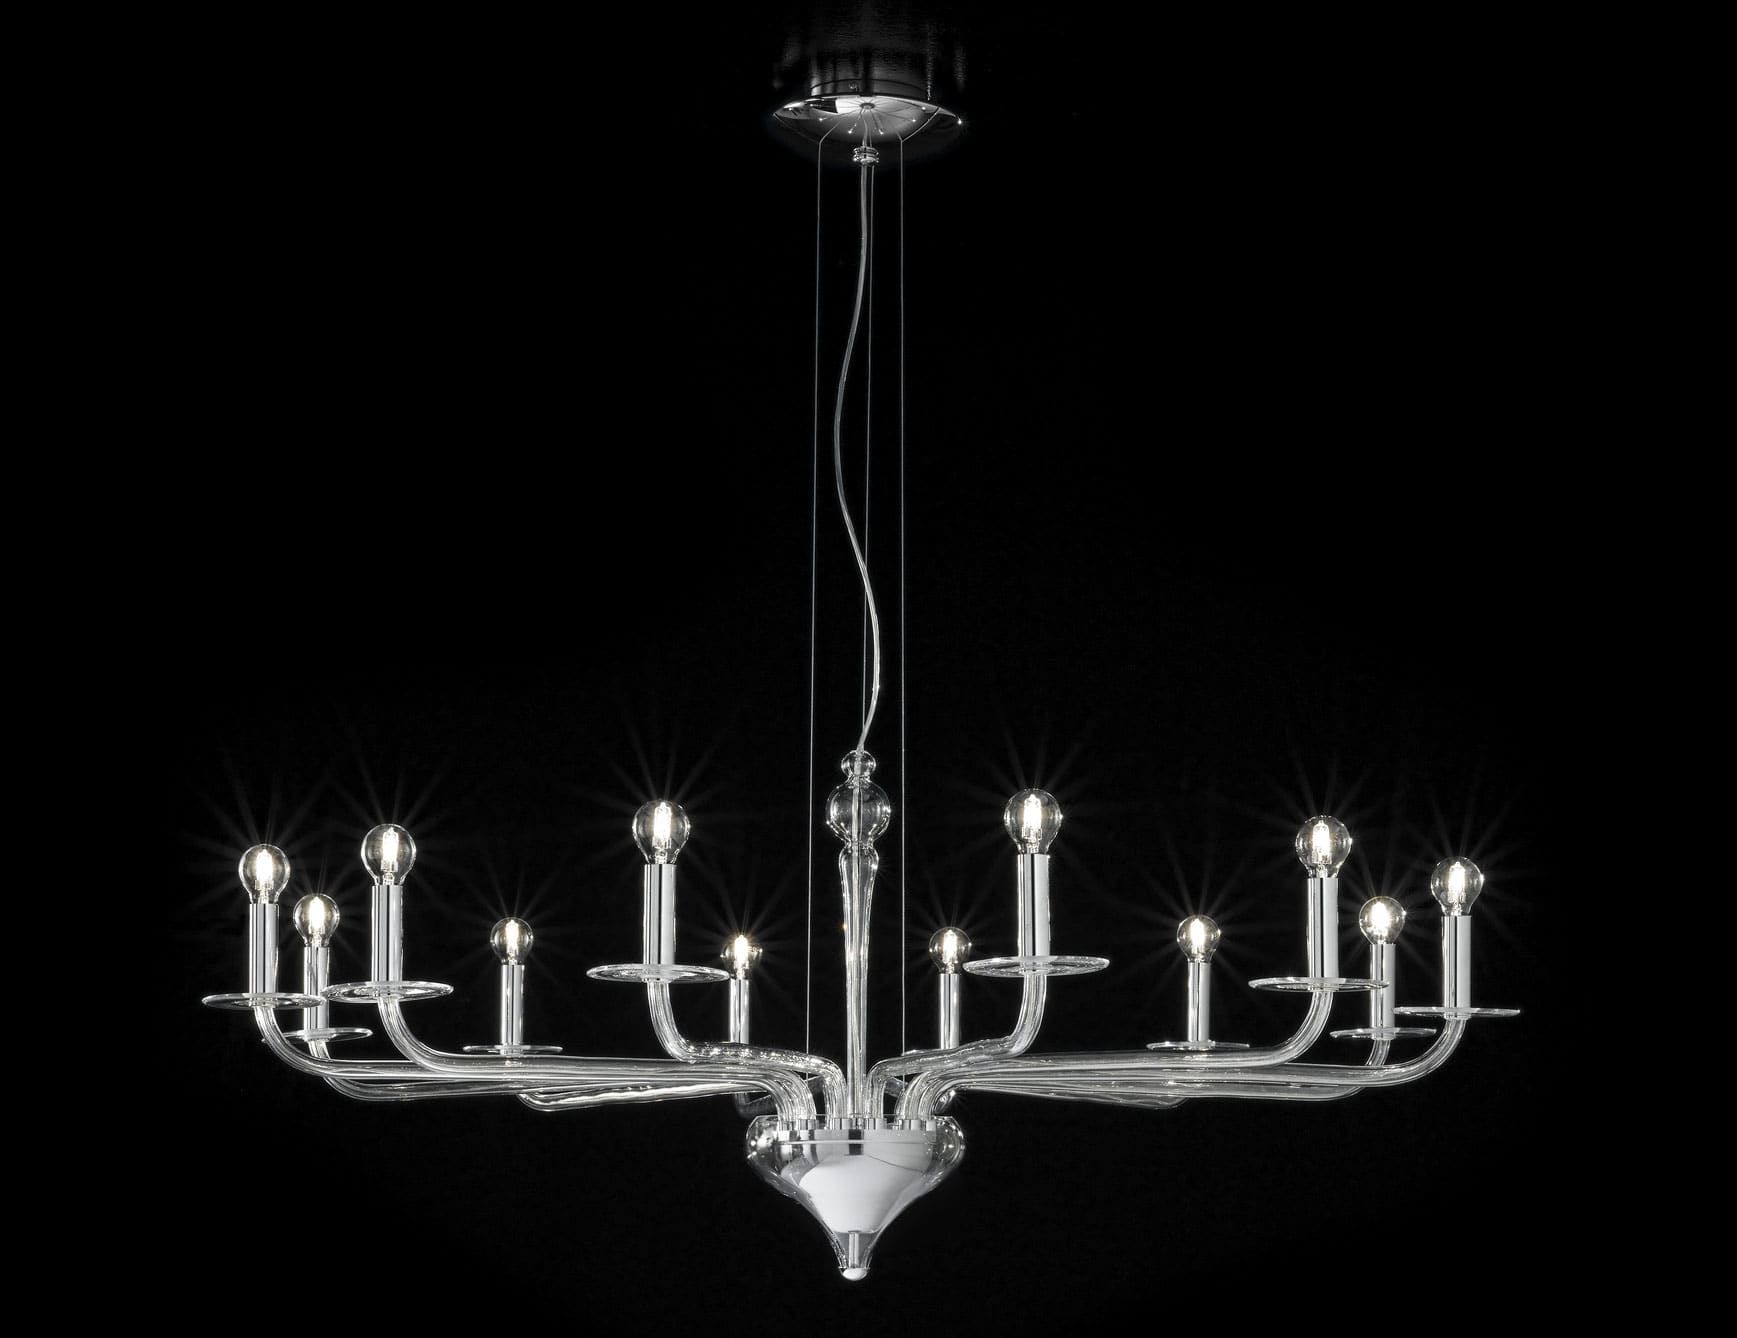 Sahara modern luxury chandelier with silver glass